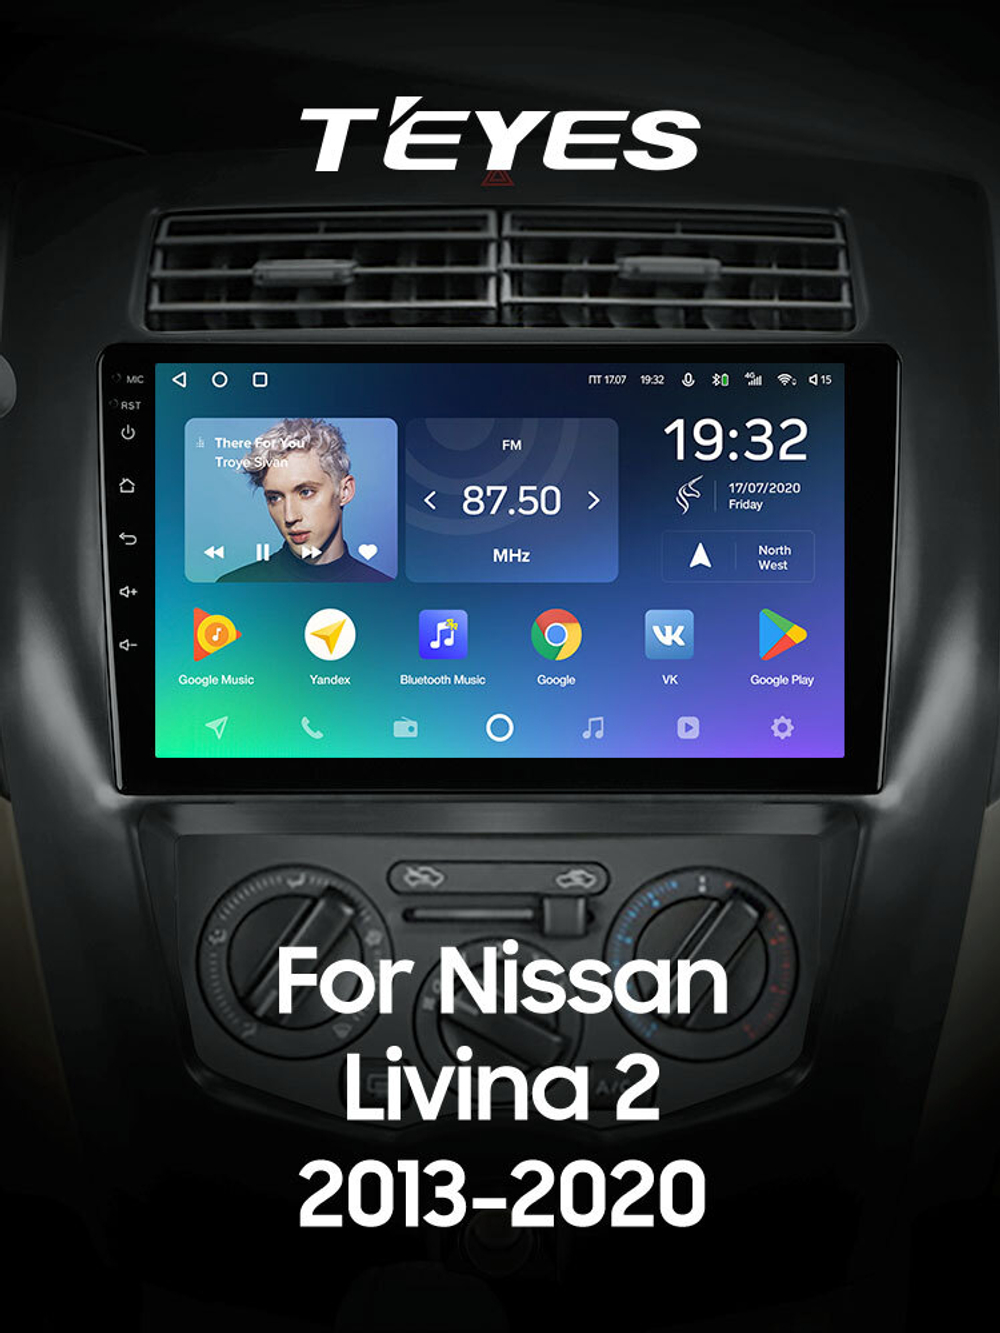 Teyes SPRO Plus 10,2" для Nissan Livina 2 2013-2020